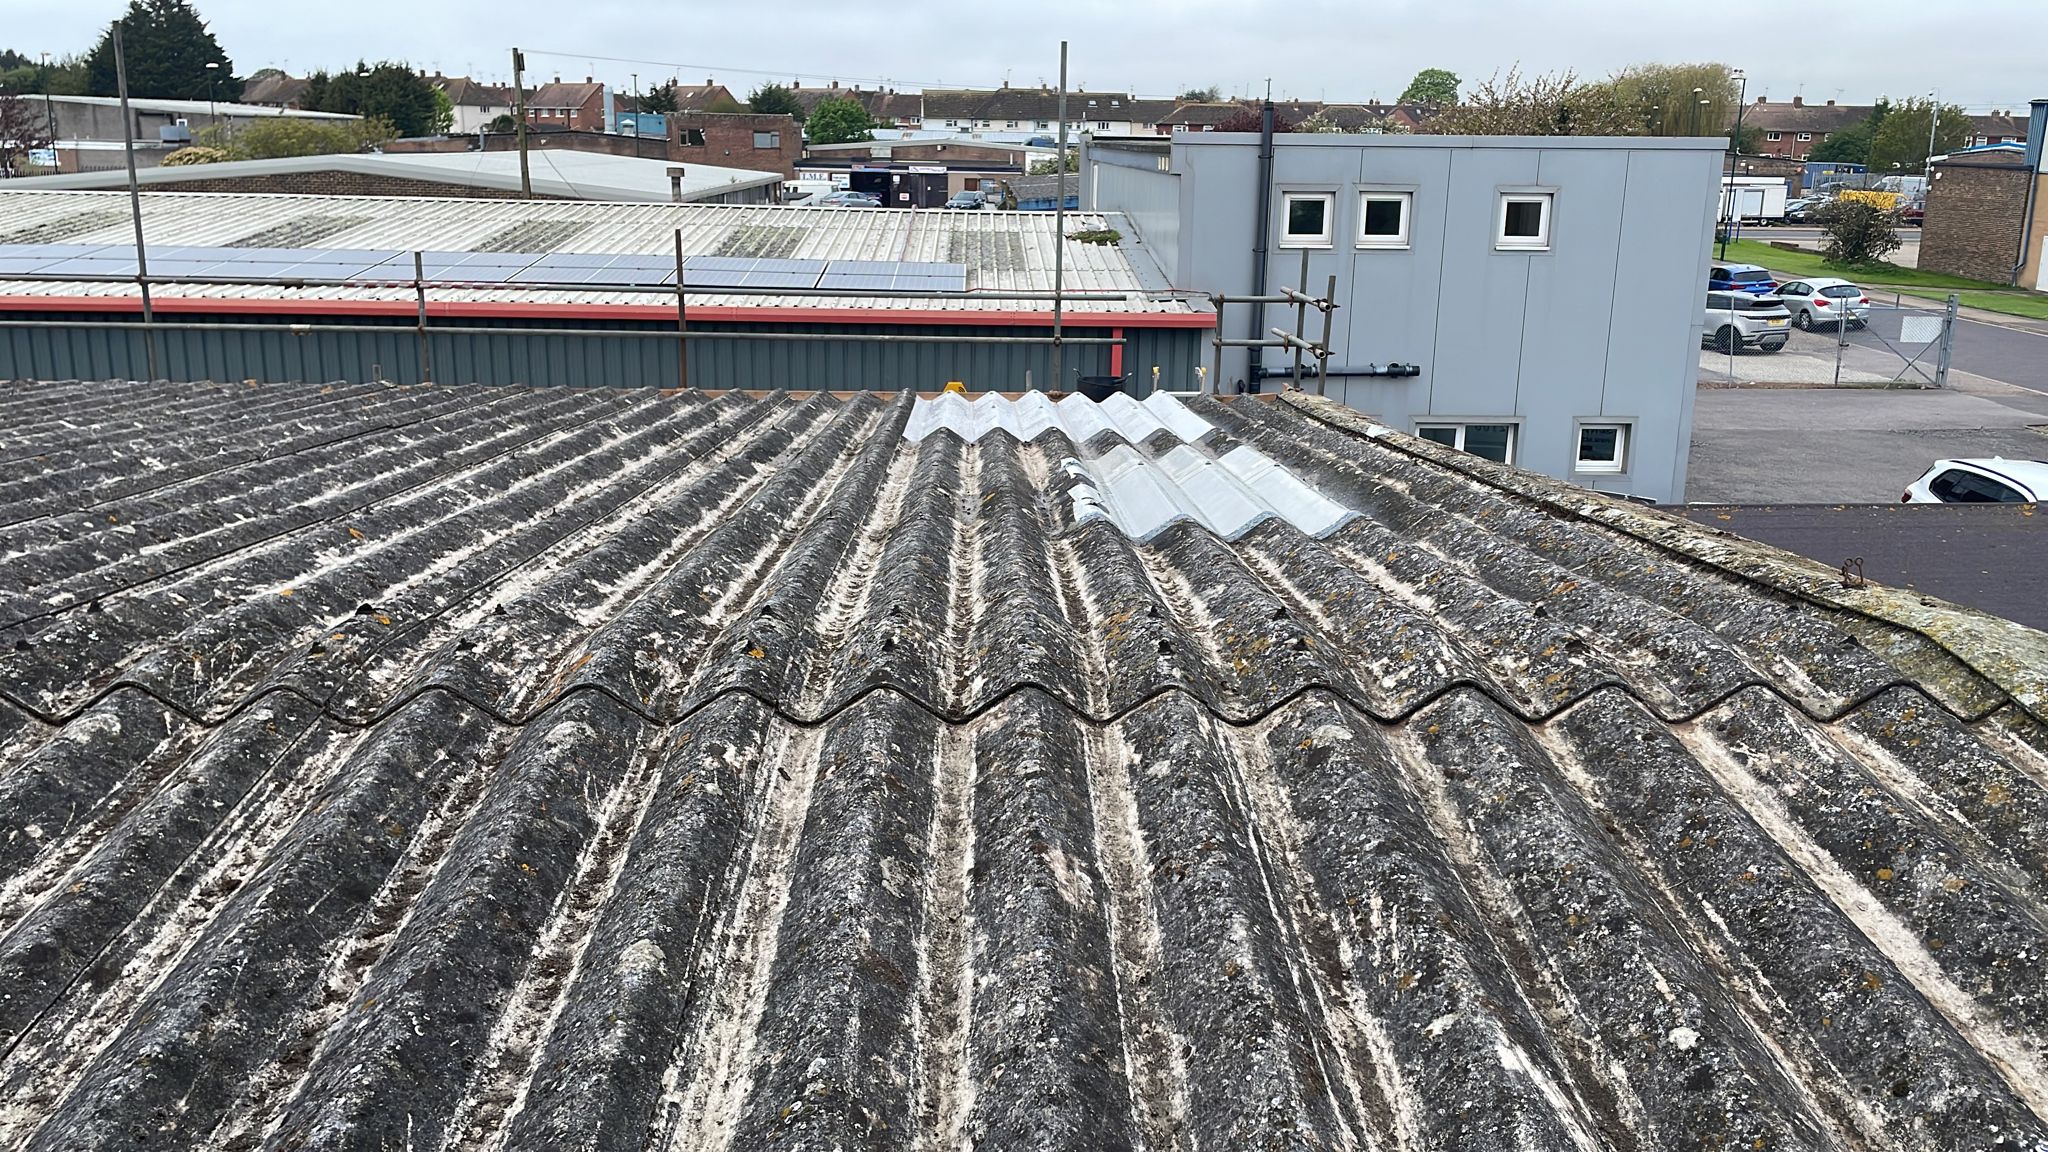 Clean Warehouse roof in Bognor Regis, West Sussex